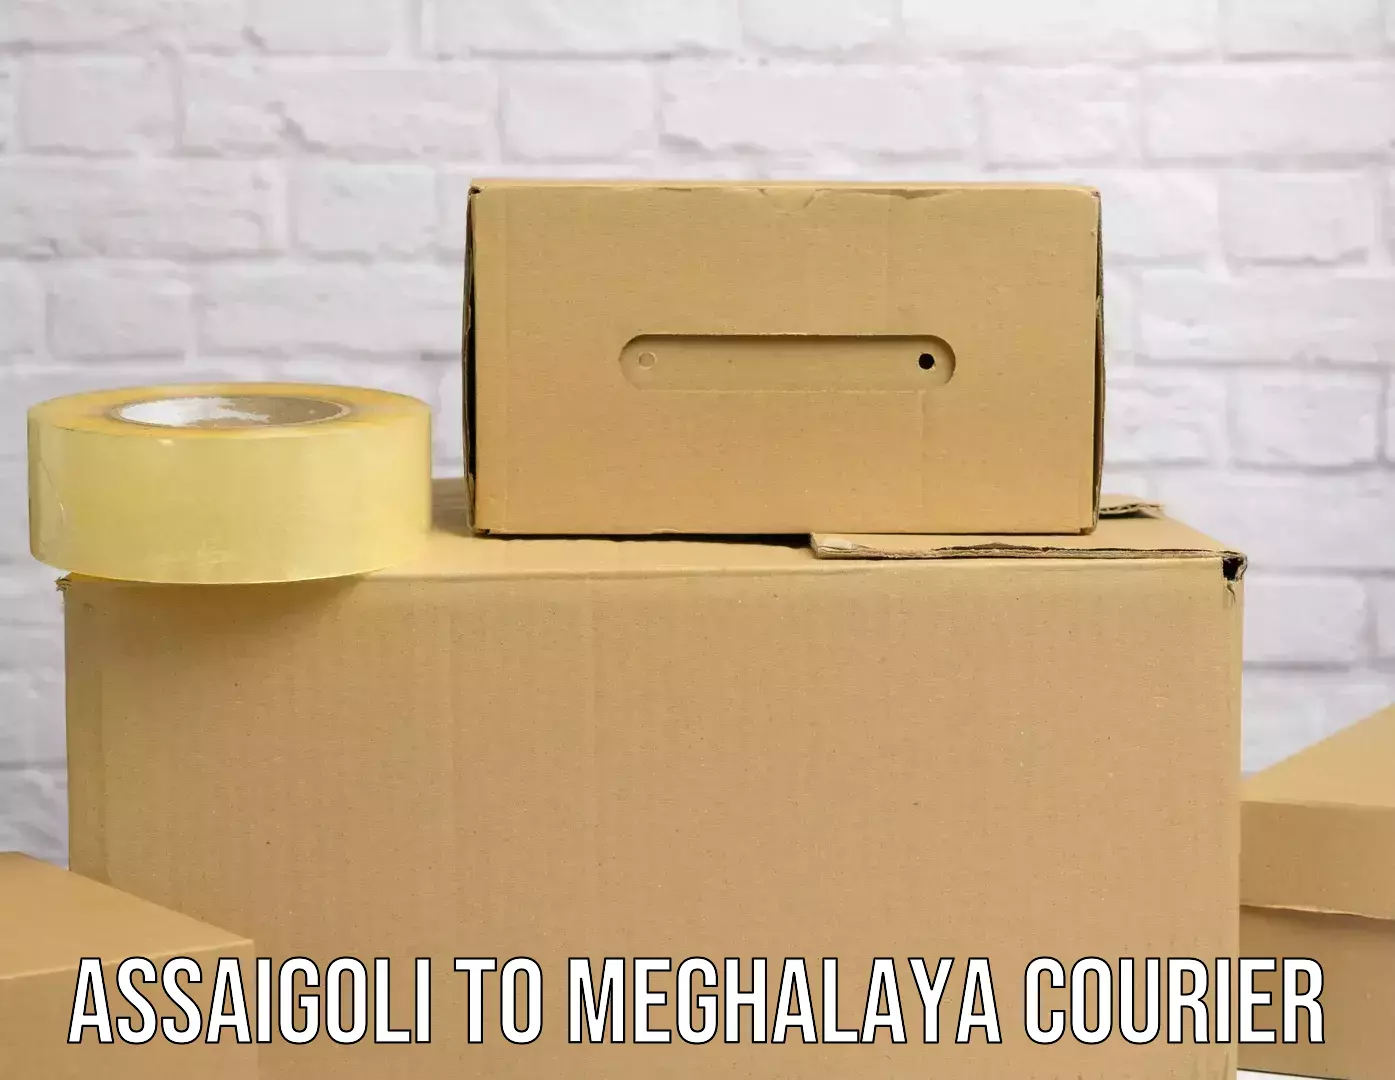 Reliable parcel services Assaigoli to Meghalaya